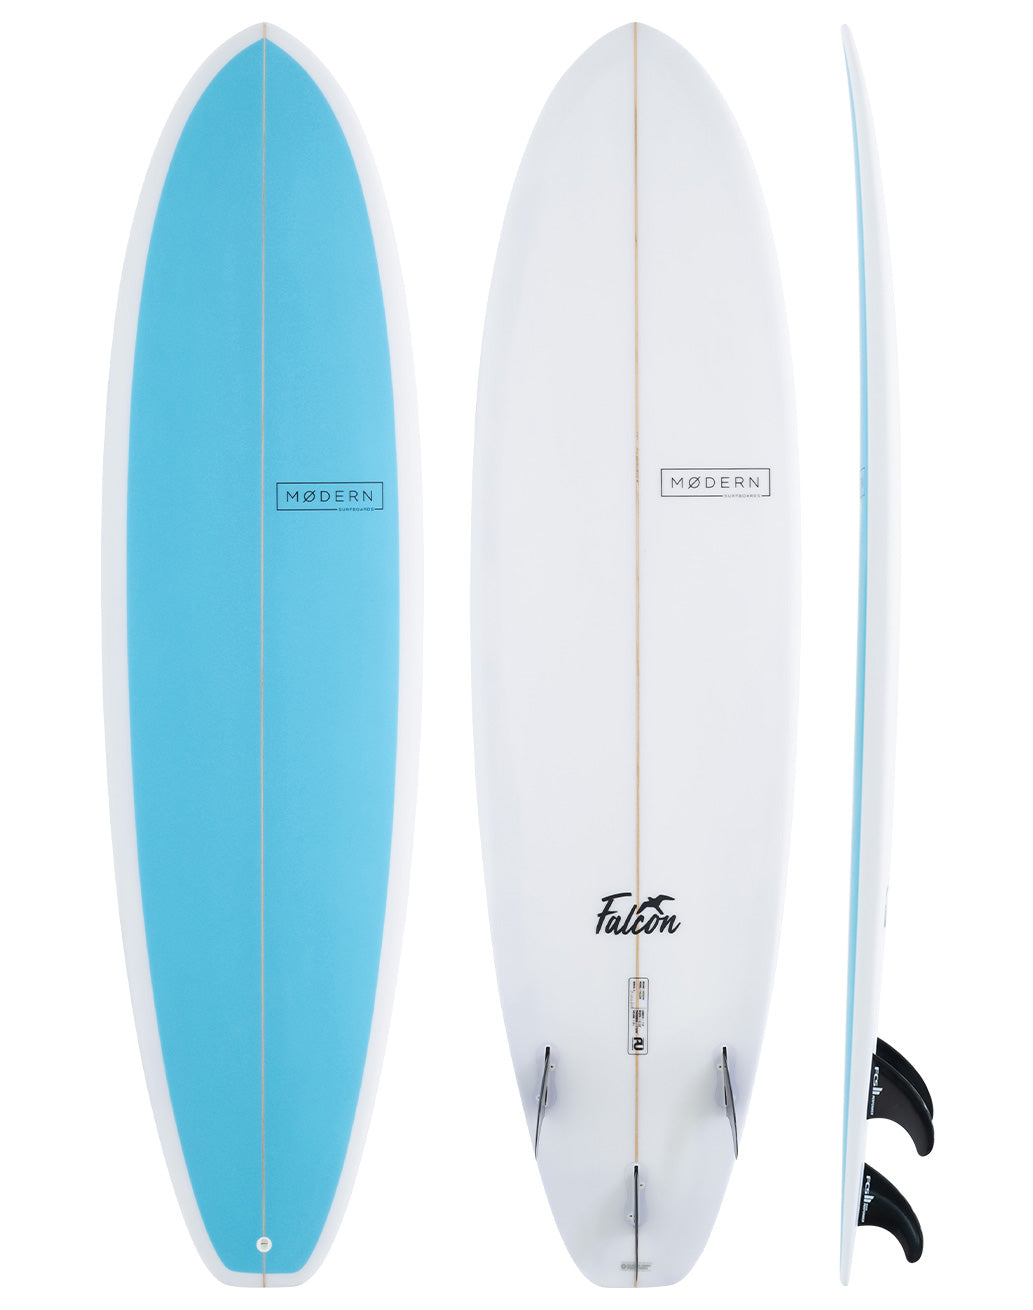 Modern Surfboard Falcon, mid length surfboard - electric blue